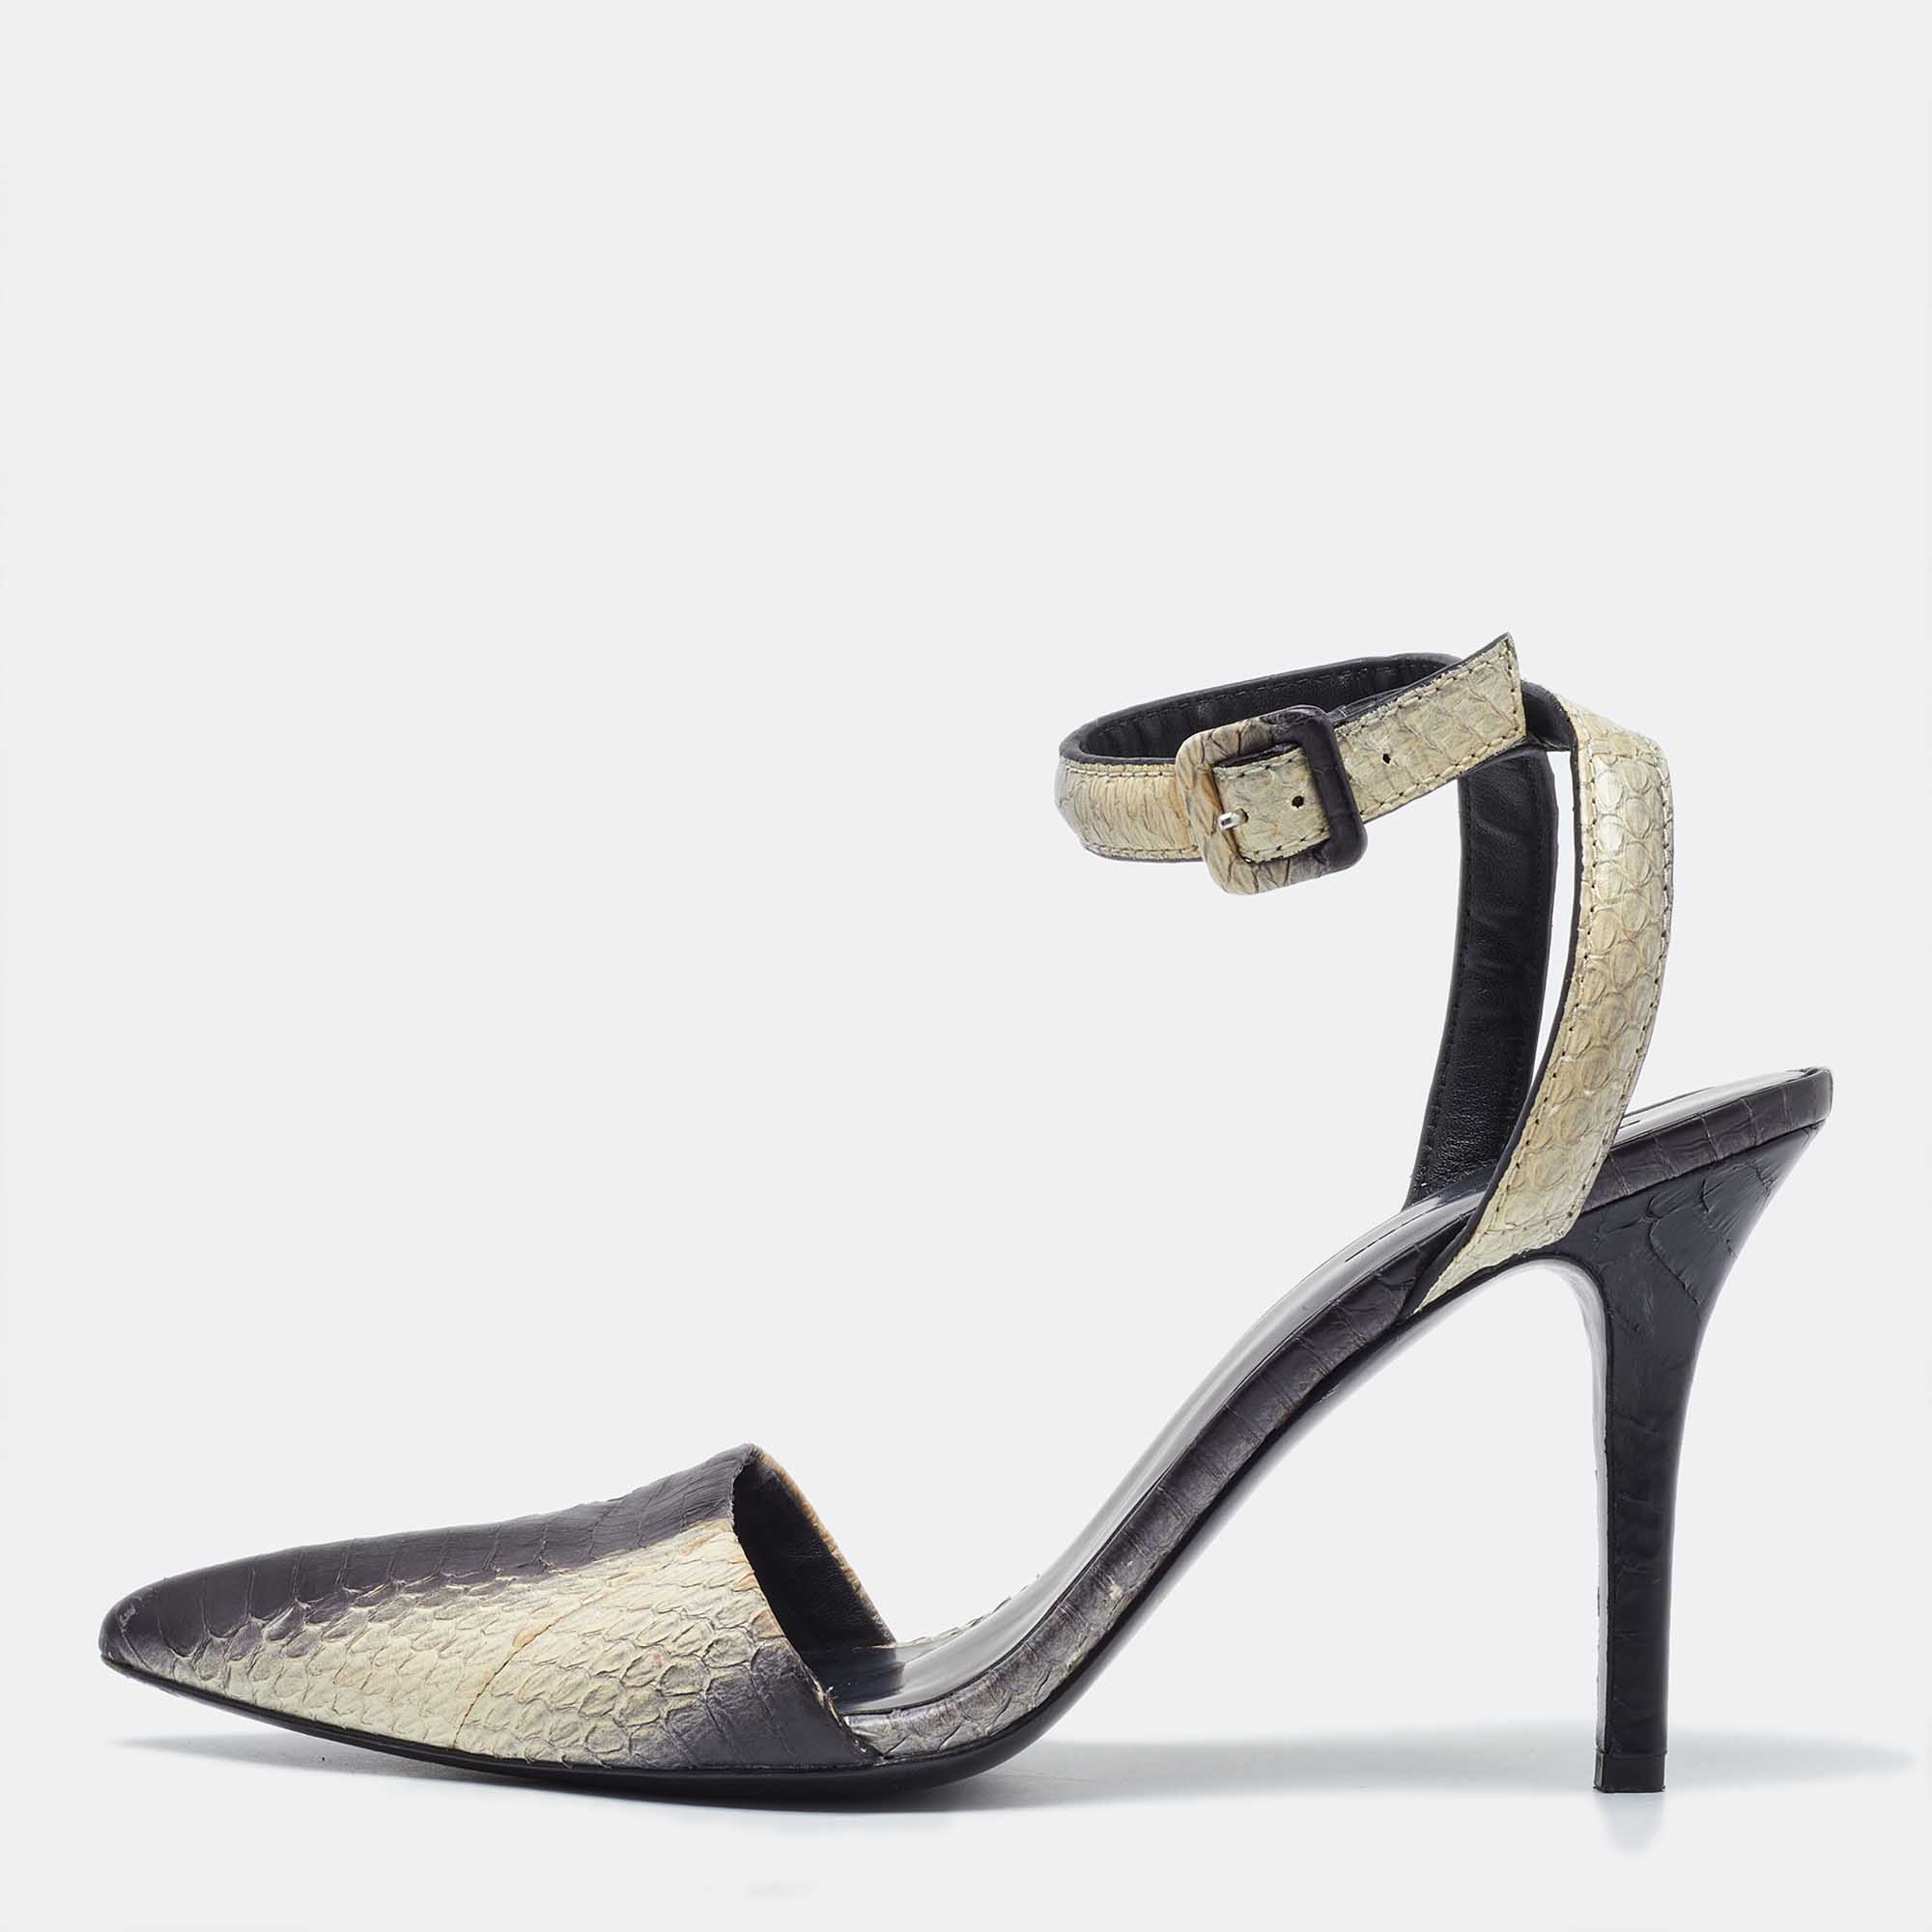 Alexander wang black/beige python leather ankle strap pumps size 40.5